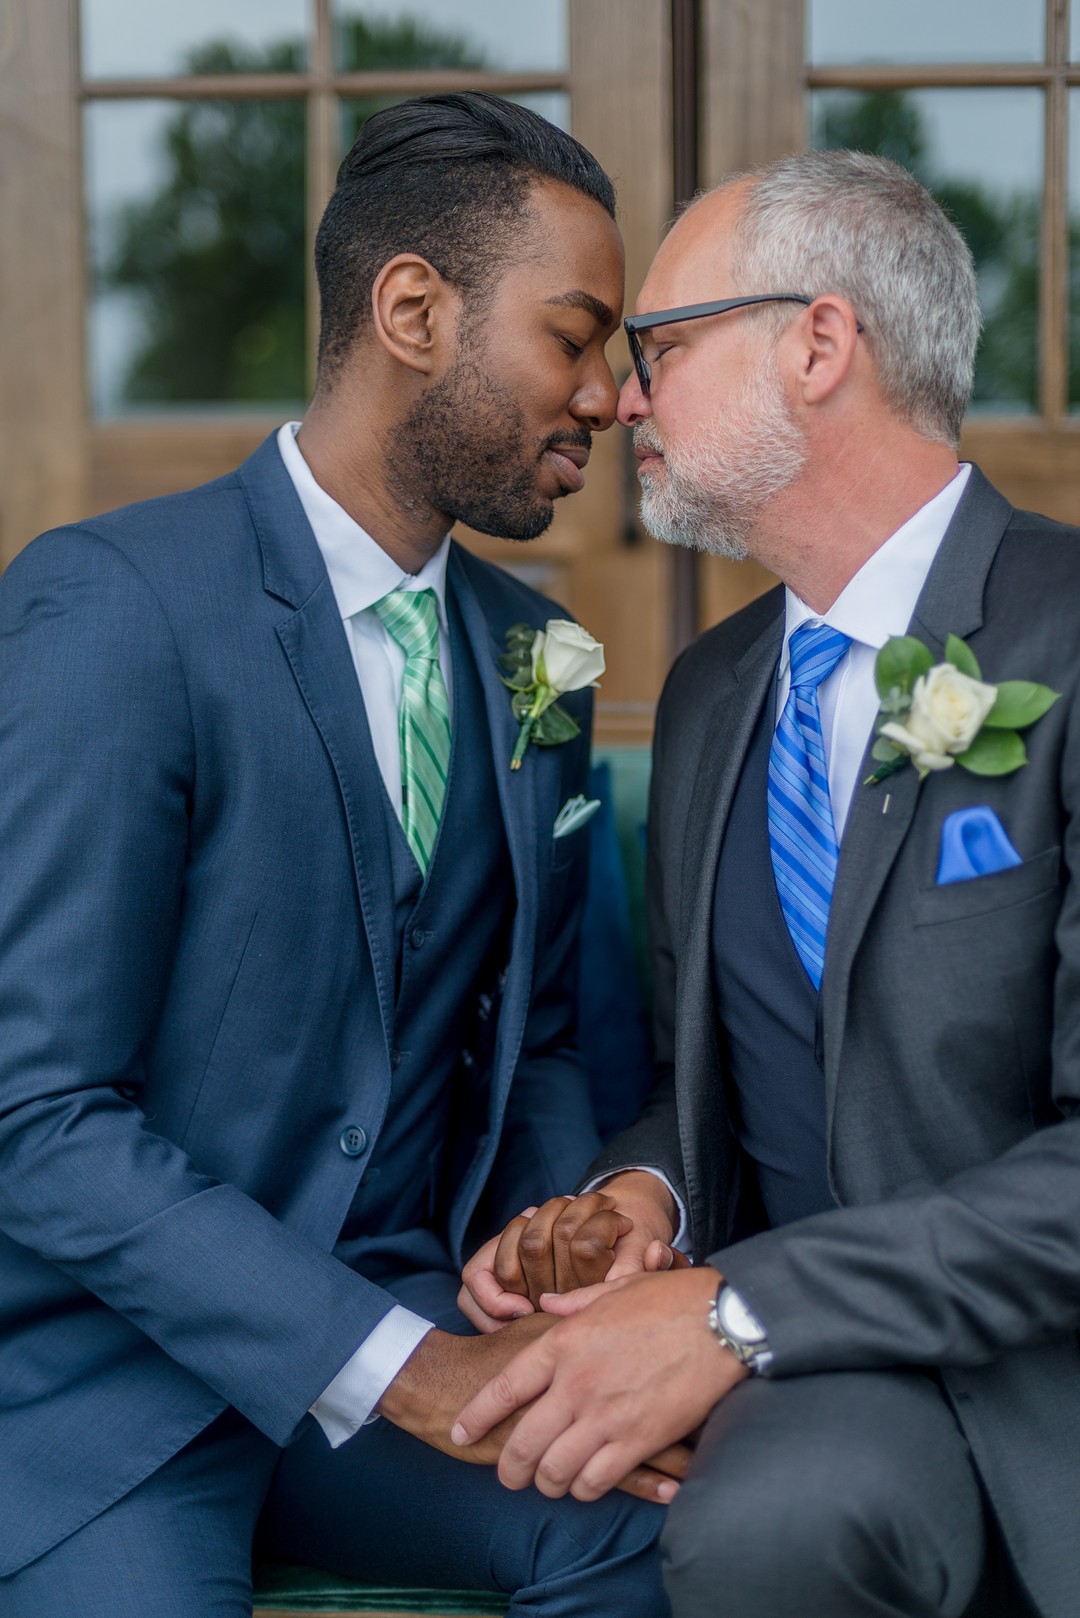  Columbus wedding planner - gay wedding - blue and green wedding colors - cincinnati wedding designer - wedding planning cincinnati 